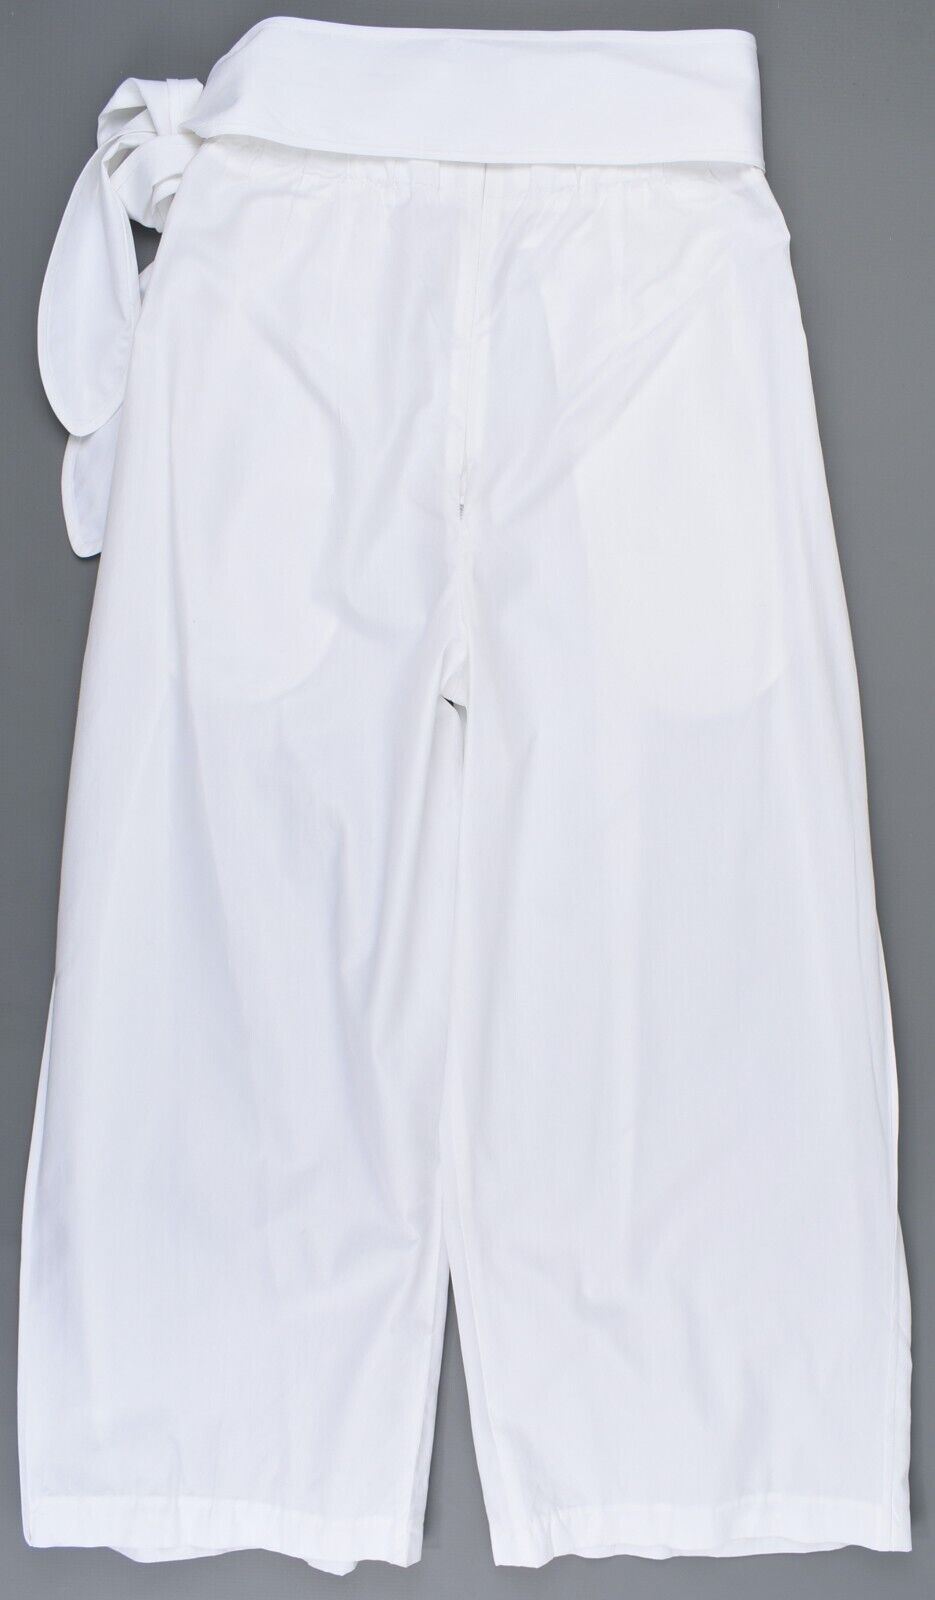 EDUN Women's Designer White Cotton Cropped Trousers, Pants, size UK 4